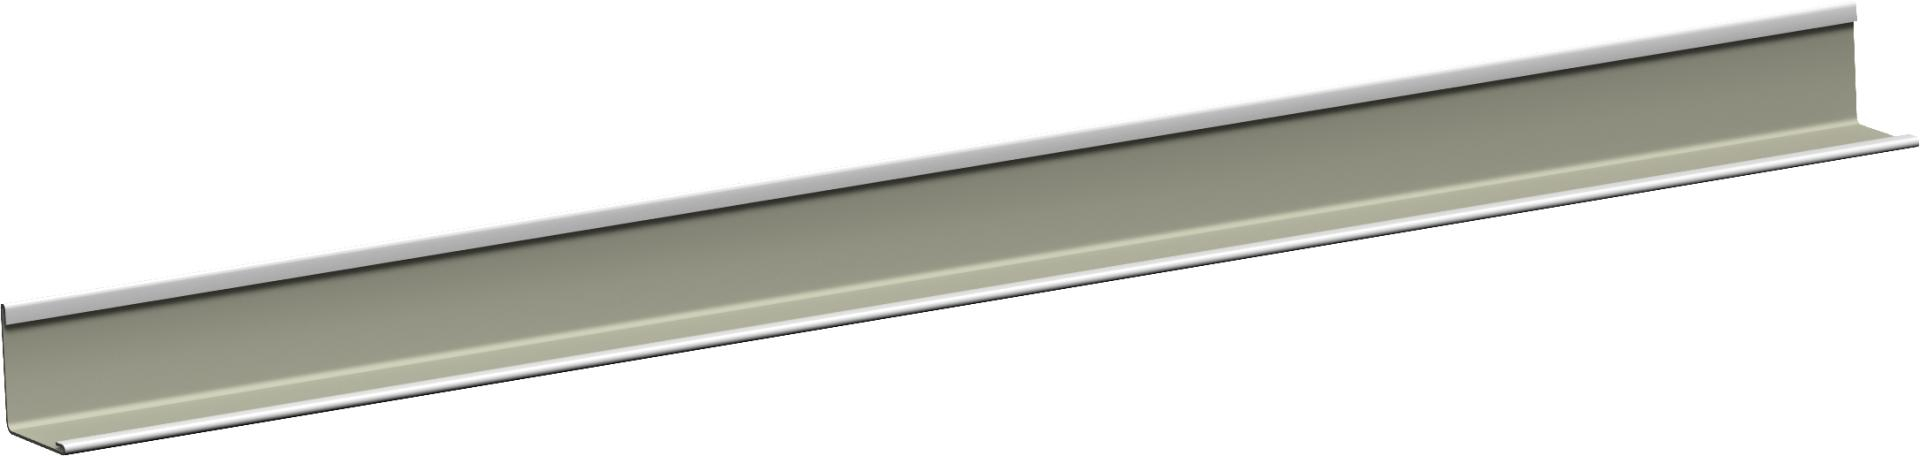 corniere-plafond-19x19-blanc-3050mm-180648-0